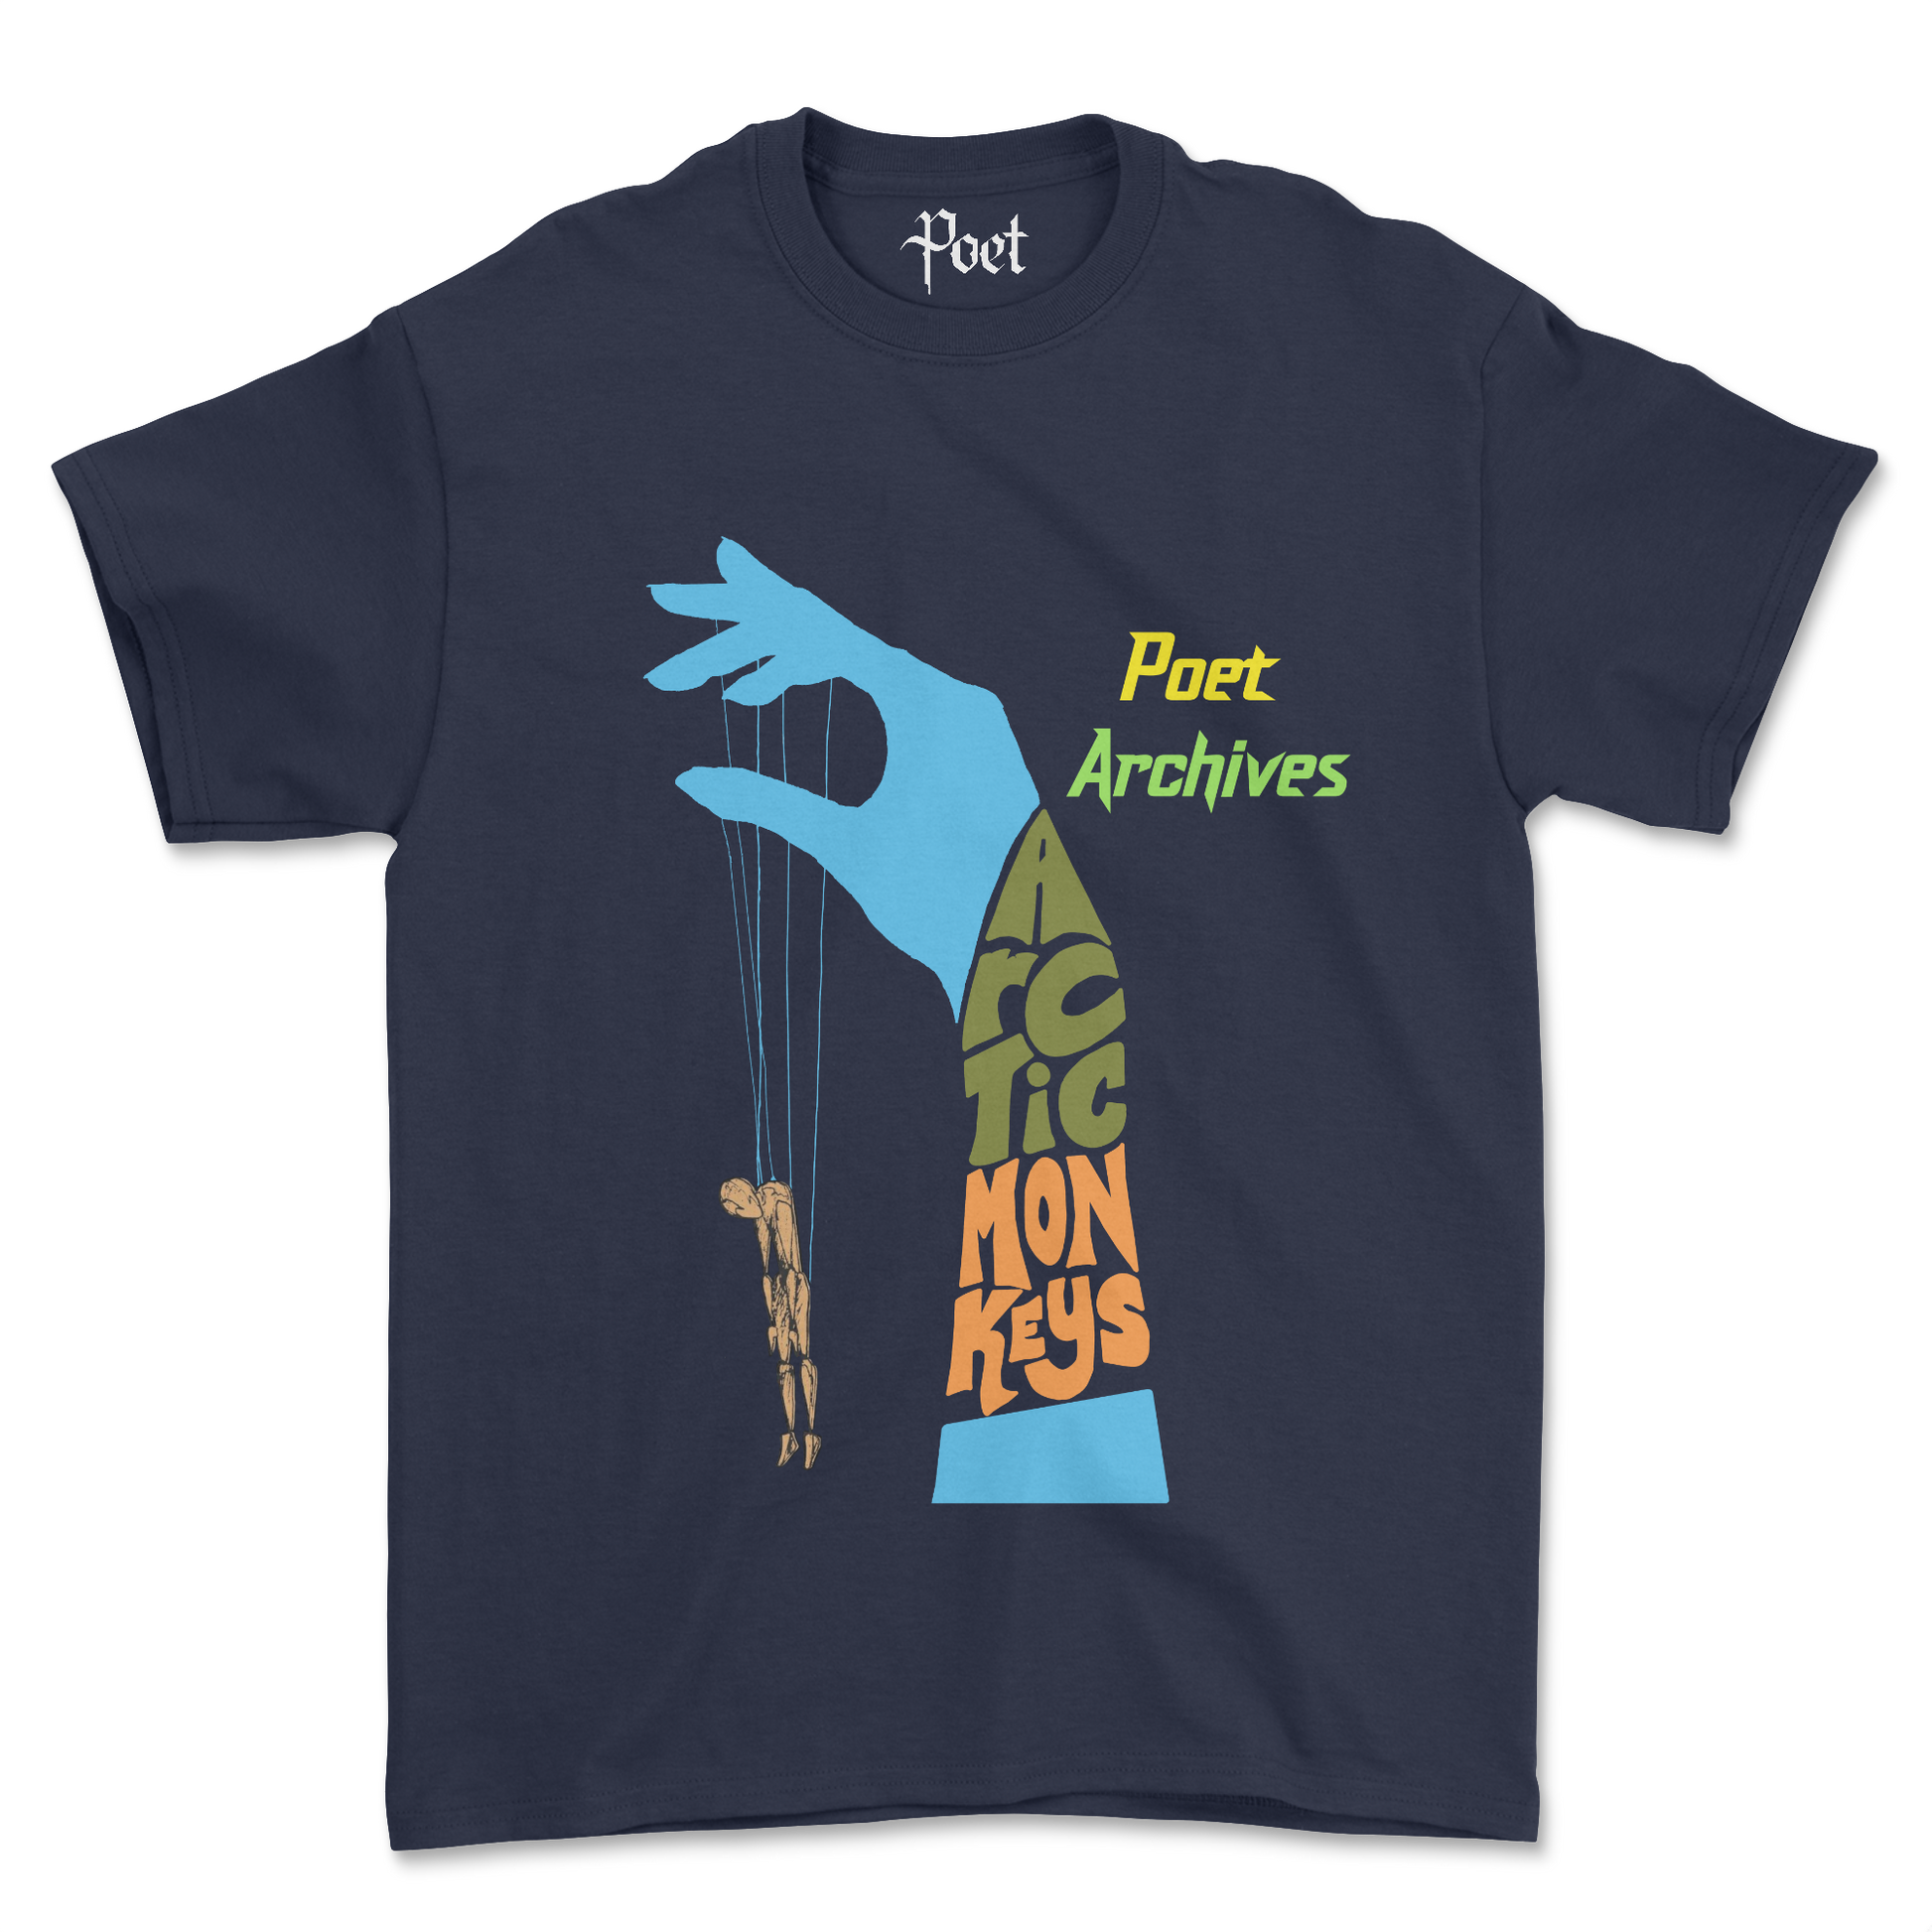 Arctic Monkeys T-Shirt - Poet Archives